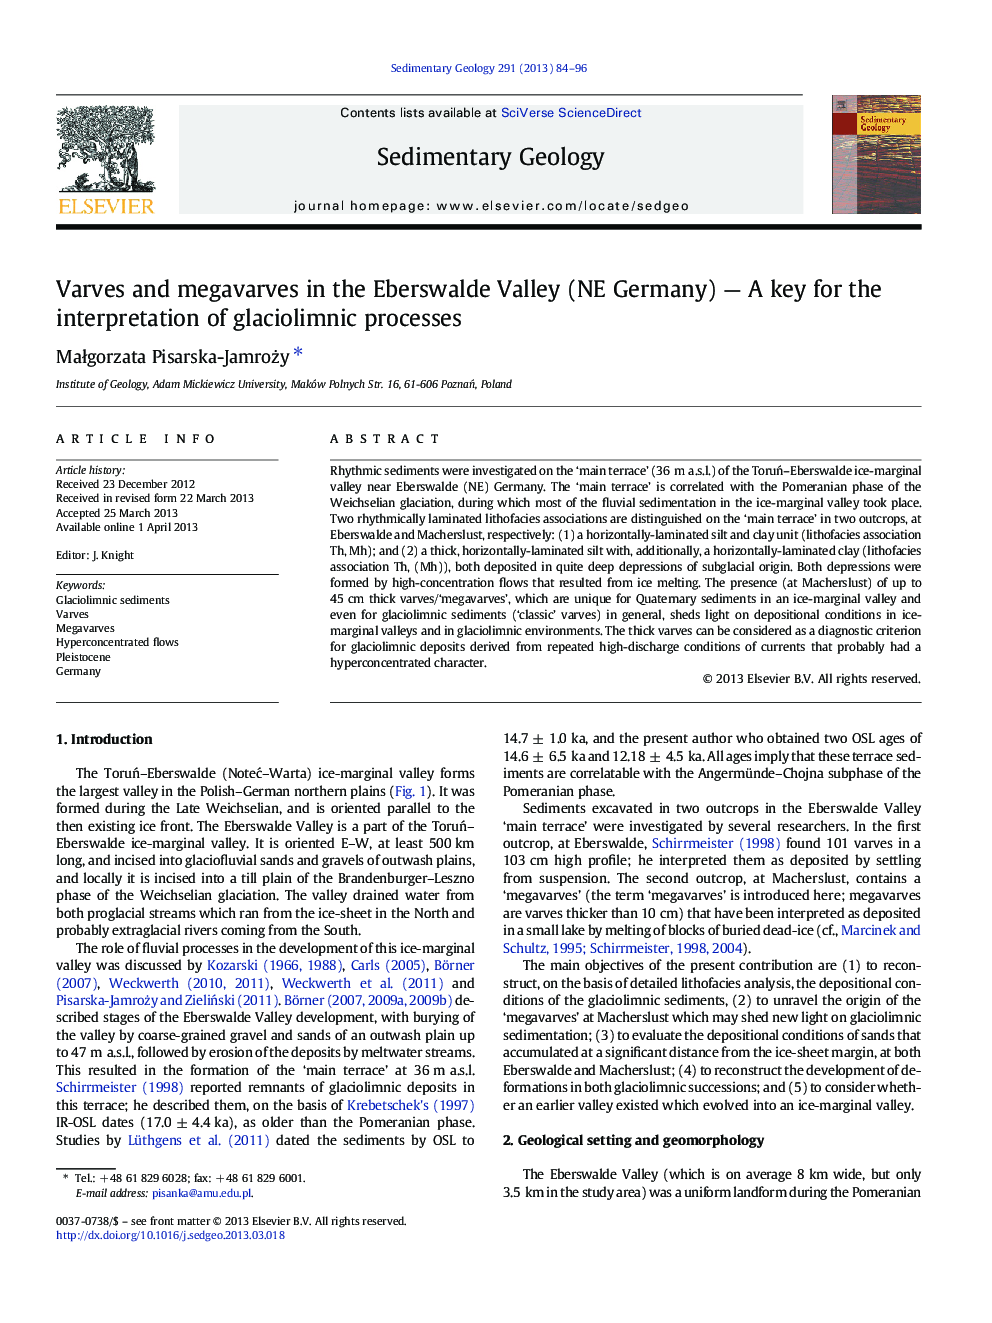 Varves and megavarves in the Eberswalde Valley (NE Germany) — A key for the interpretation of glaciolimnic processes